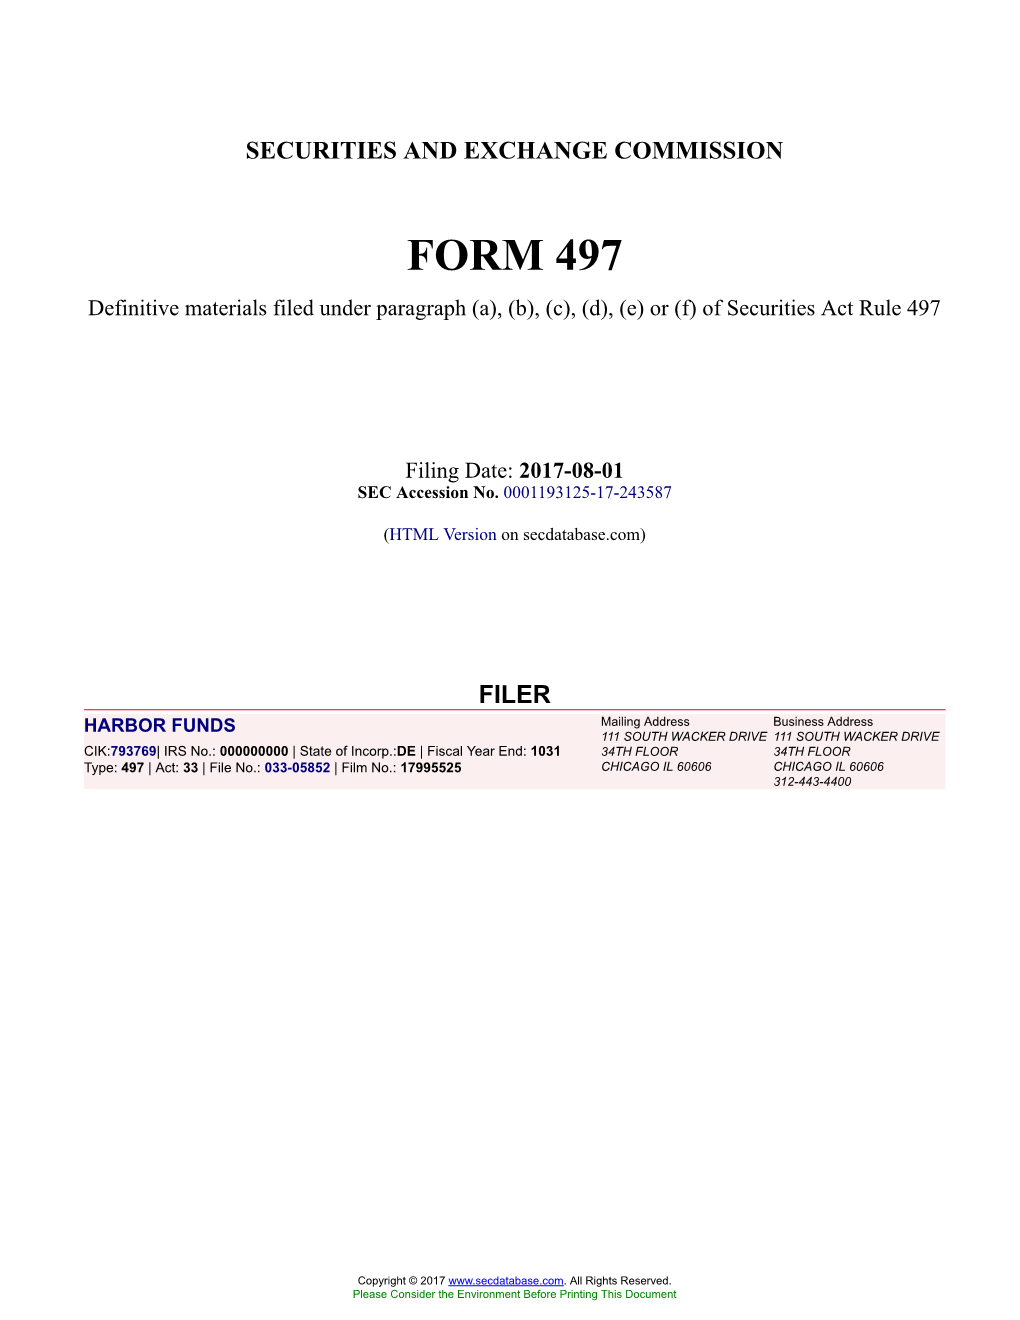 HARBOR FUNDS Form 497 Filed 2017-08-01